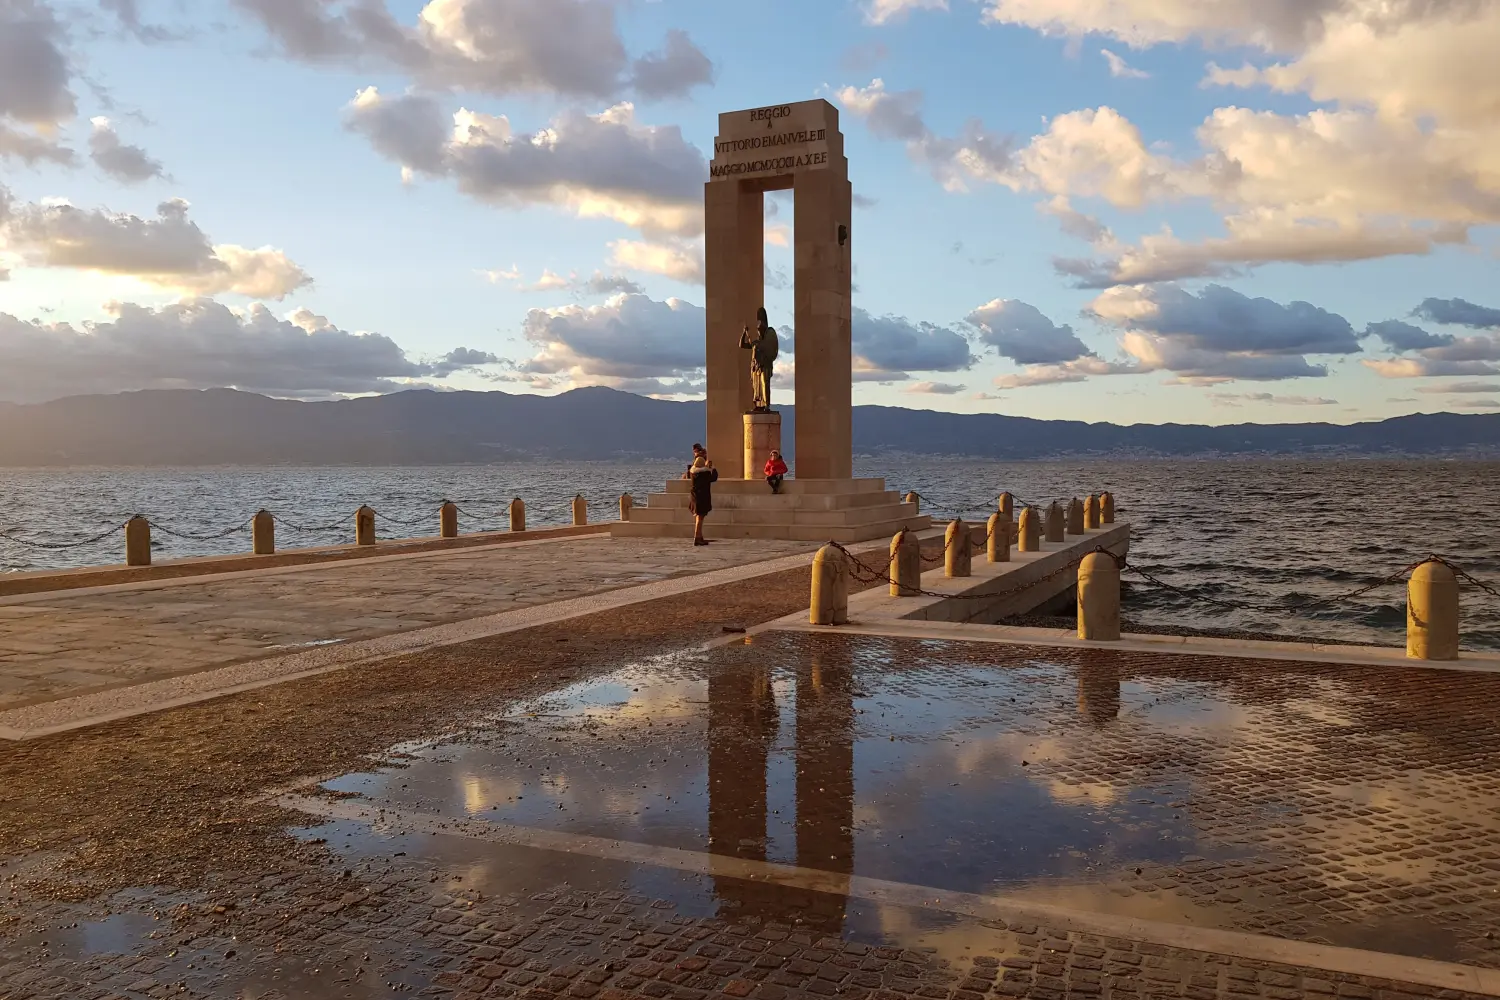 Ferry to Reggio Calabria - The Statue of Athena at Reggio Calabria's waterfront. Homage to Victor Emmanuel III